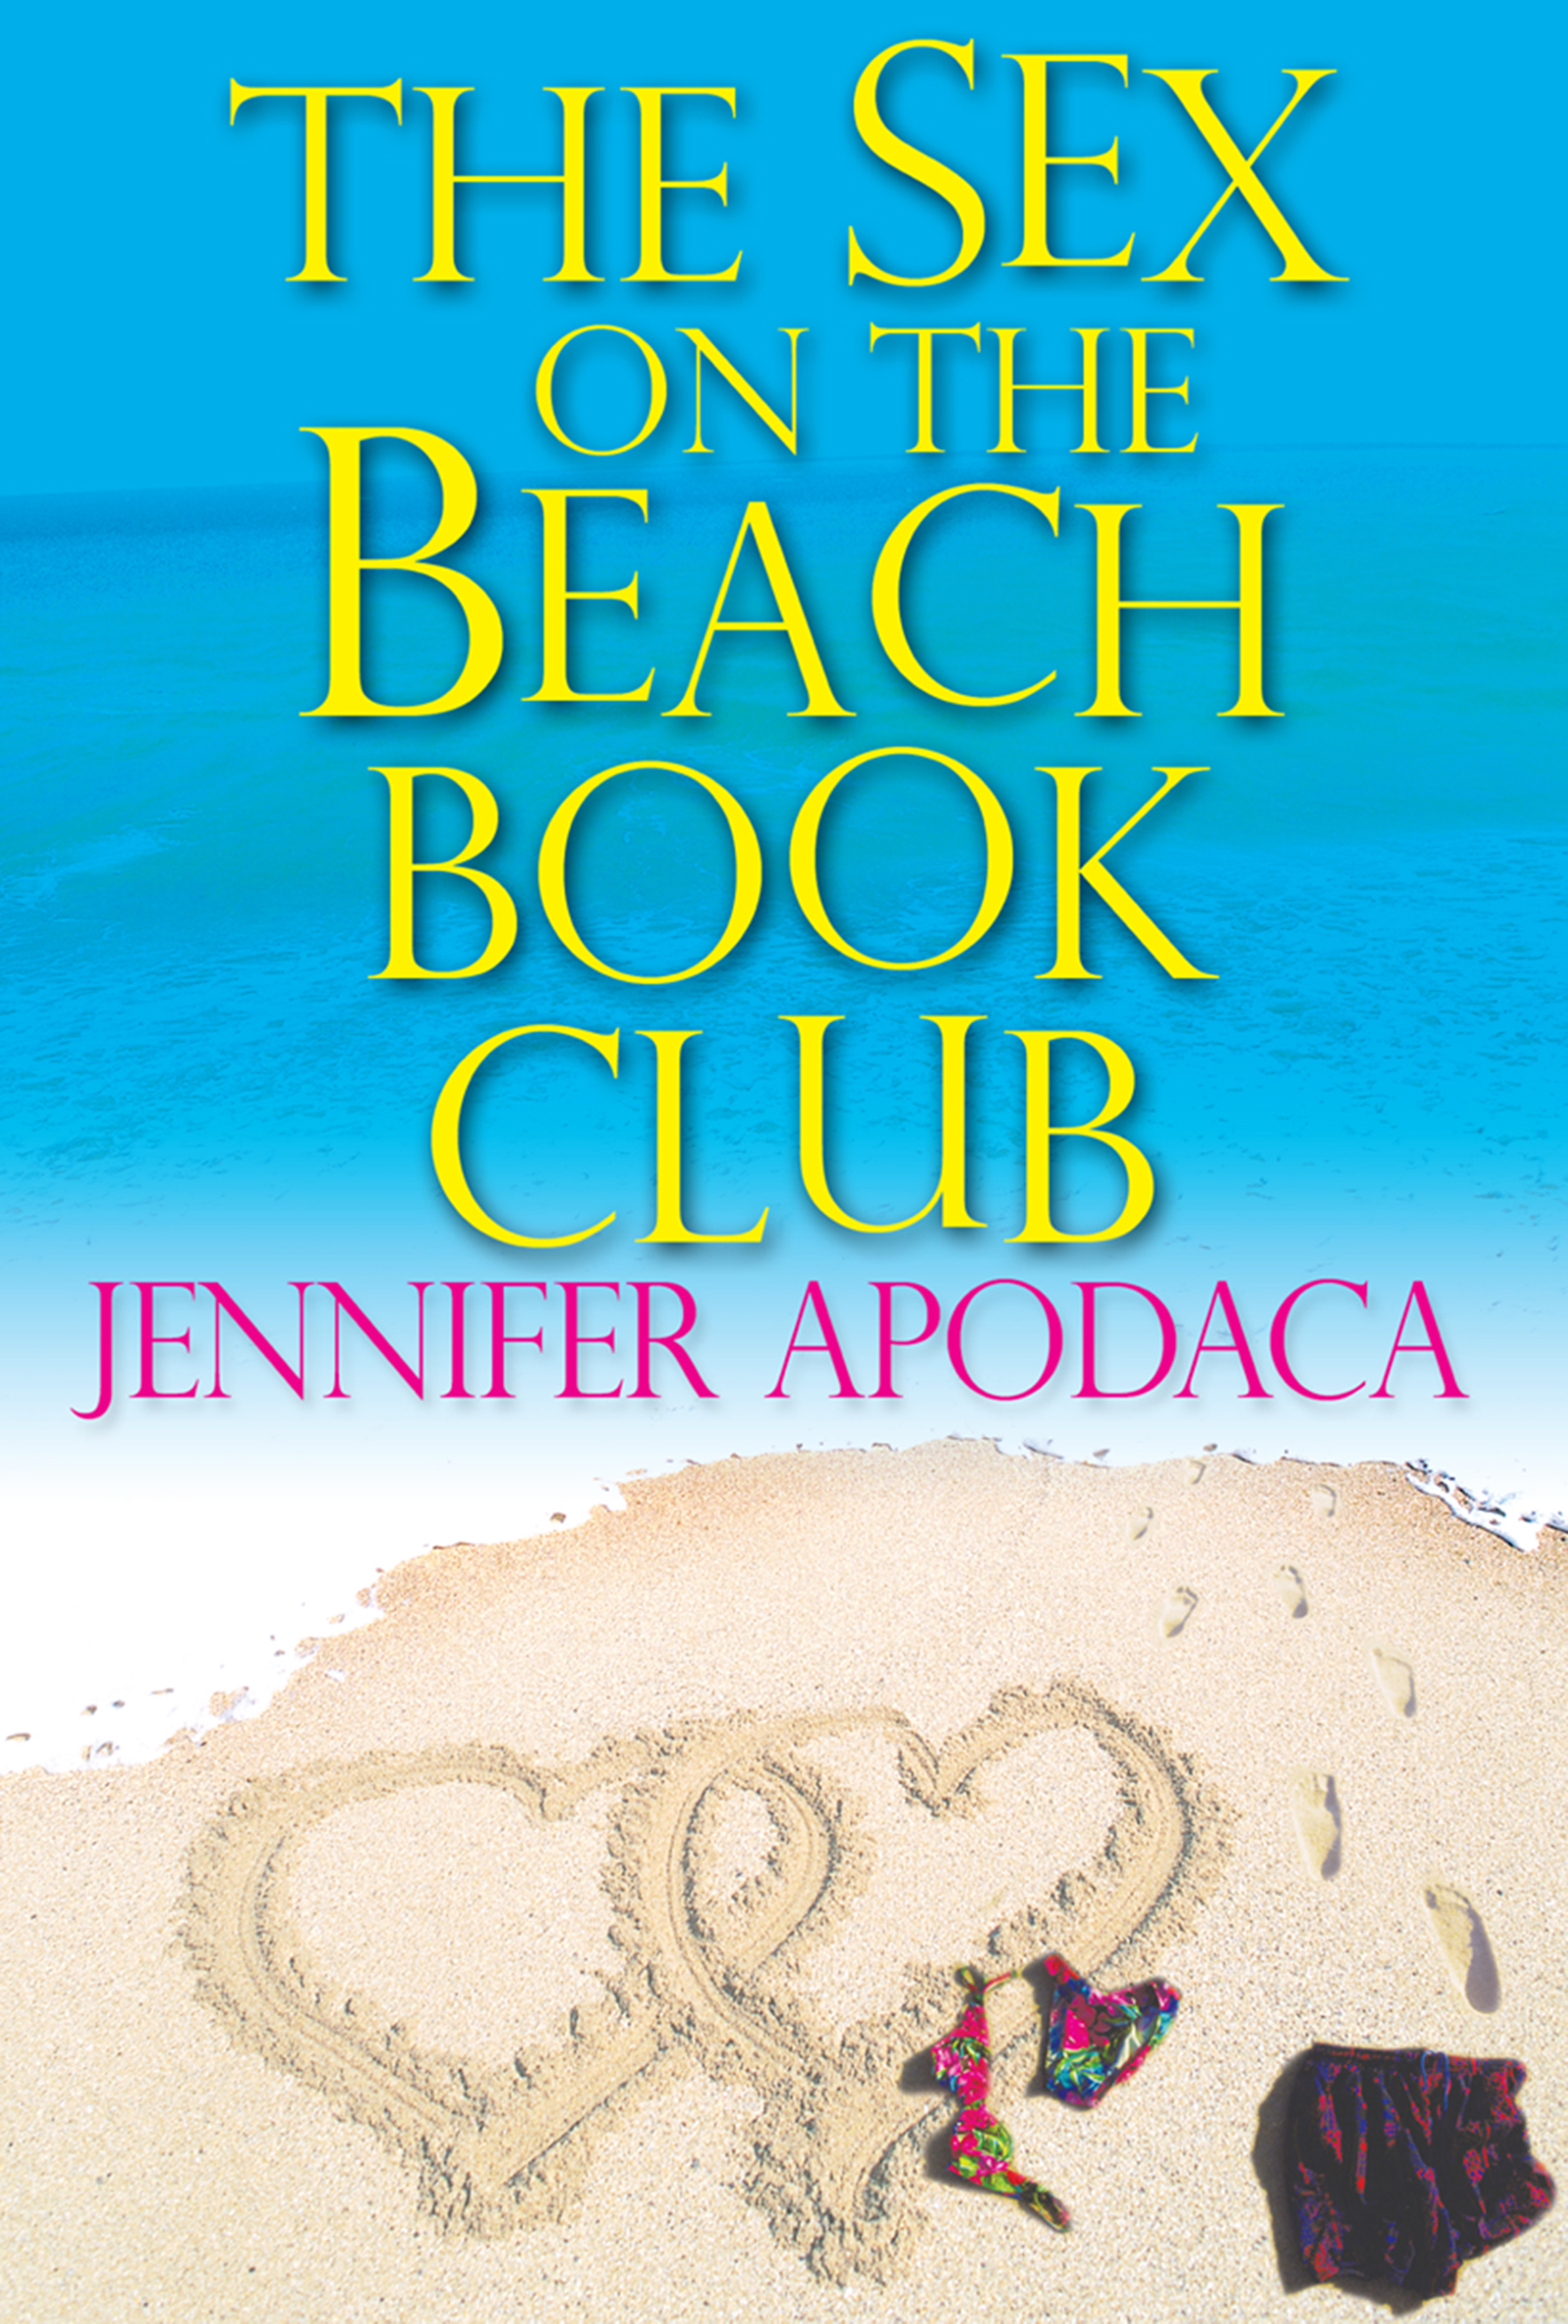 The Sex On Beach Book Club (2007) by Jennifer Apodaca